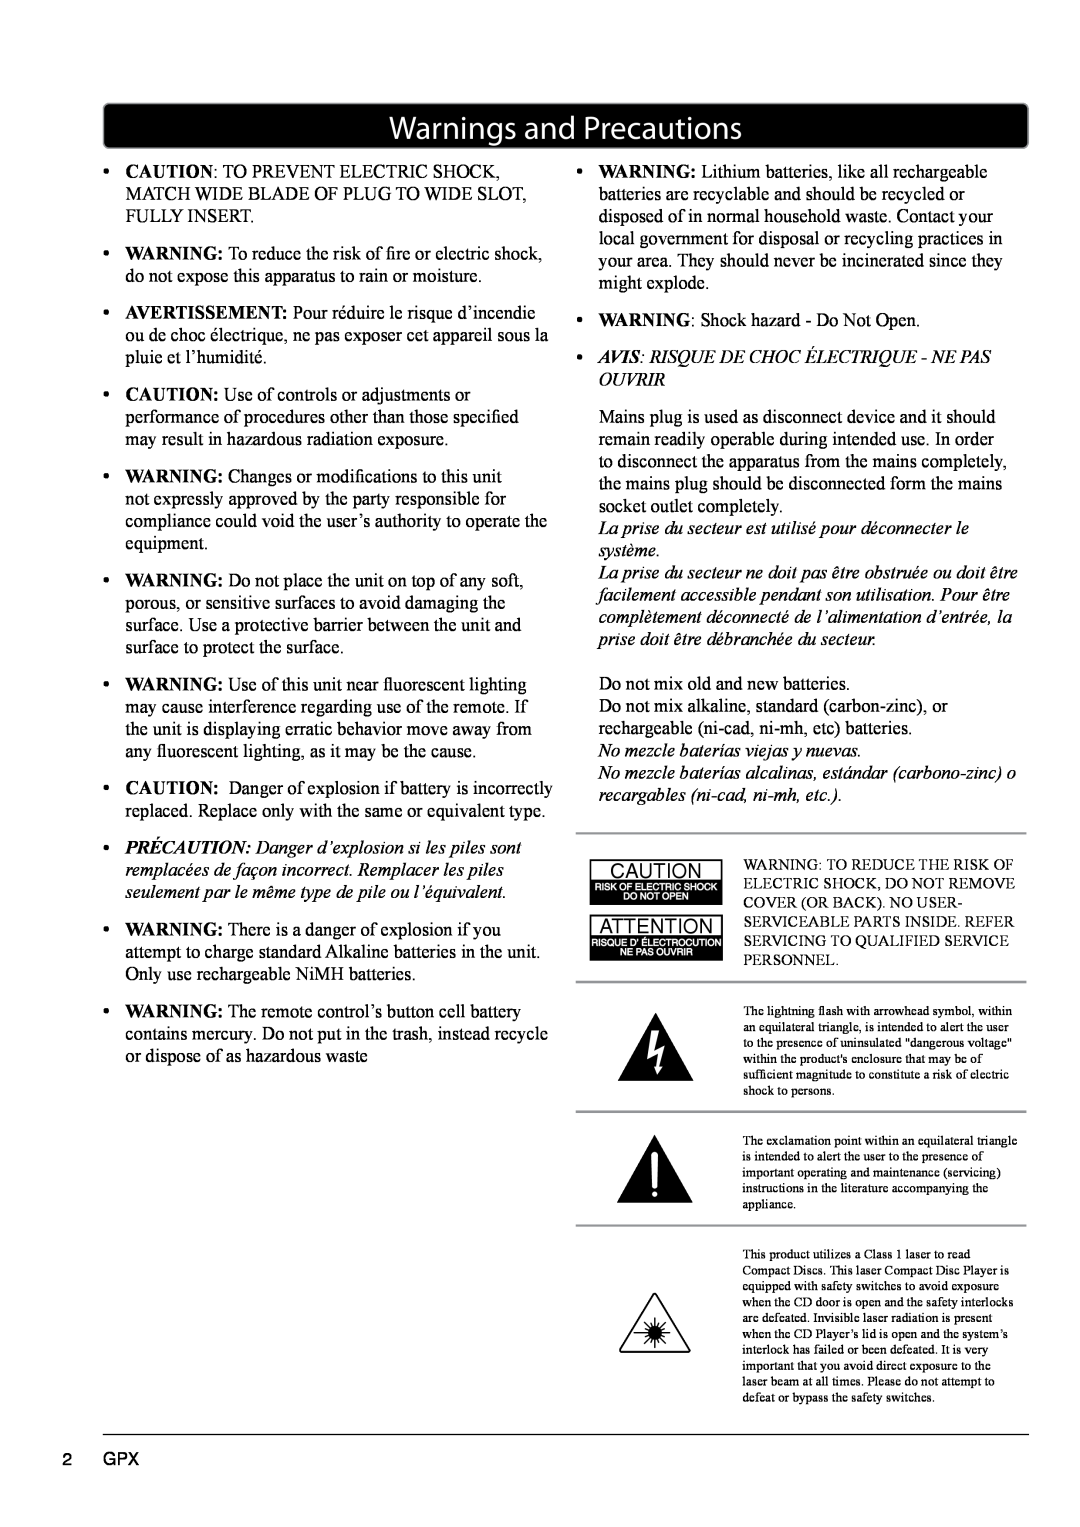 GPX TD2220 Warnings and Precautions, Avis Risque De Choc Électrique - Ne Pas Ouvrir, No mezcle baterías viejas y nuevas 